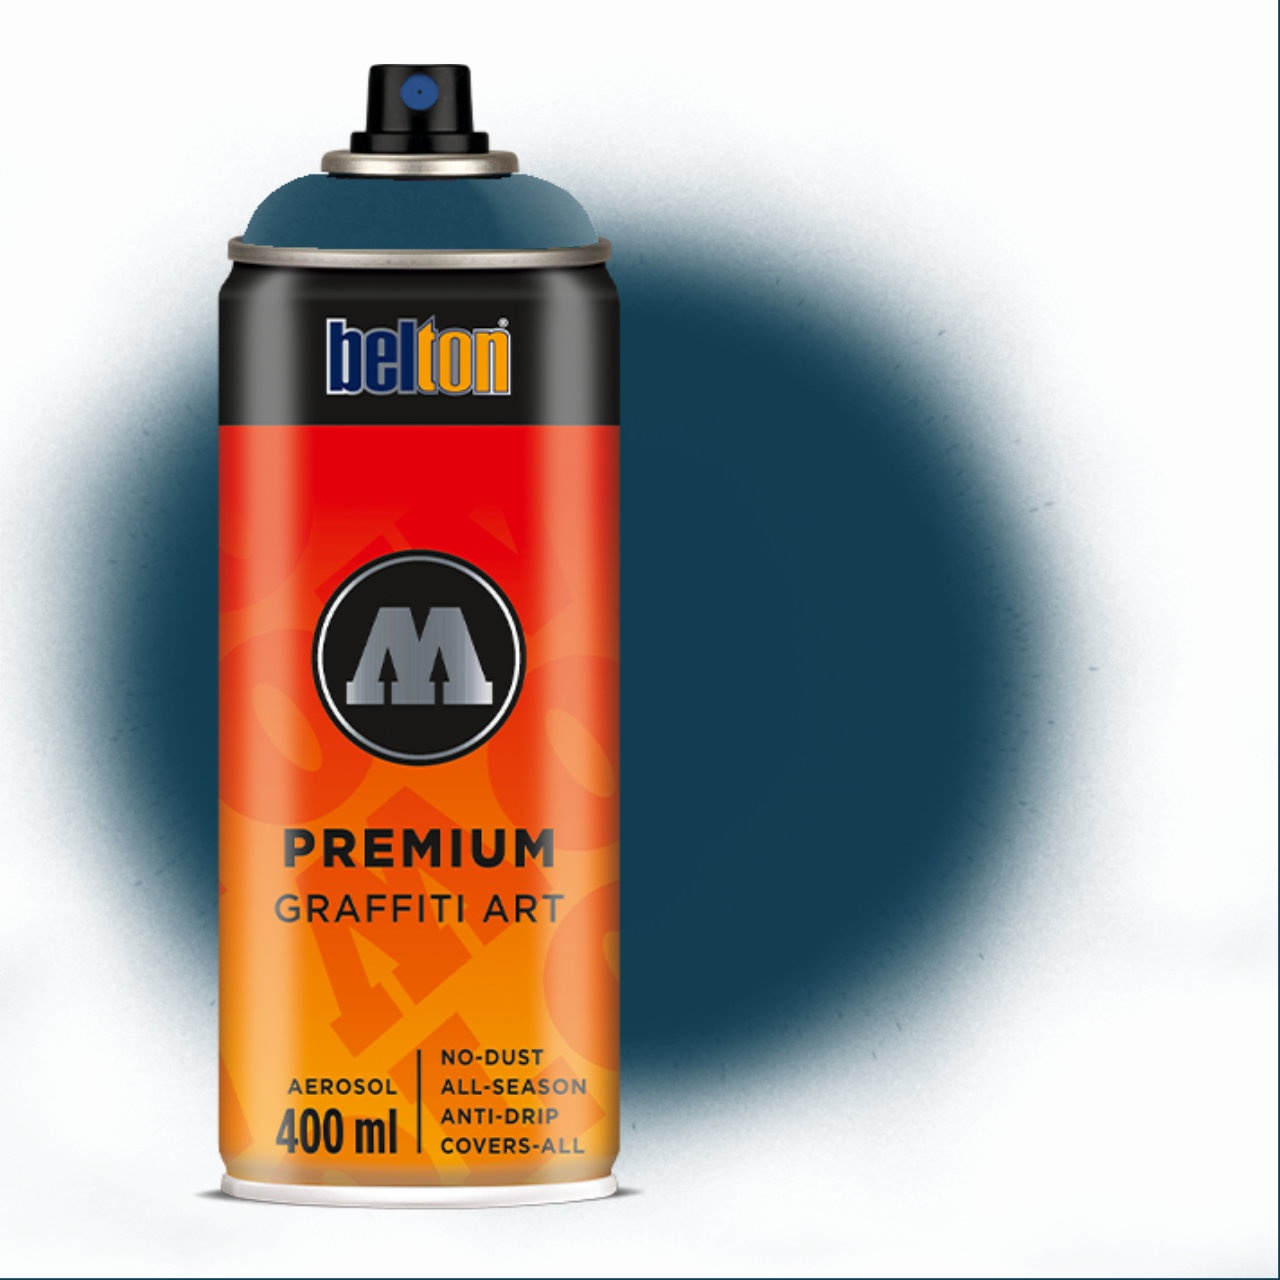 Molotow Premium Neon Spray Paint 400ml - Spray Paint from Graff